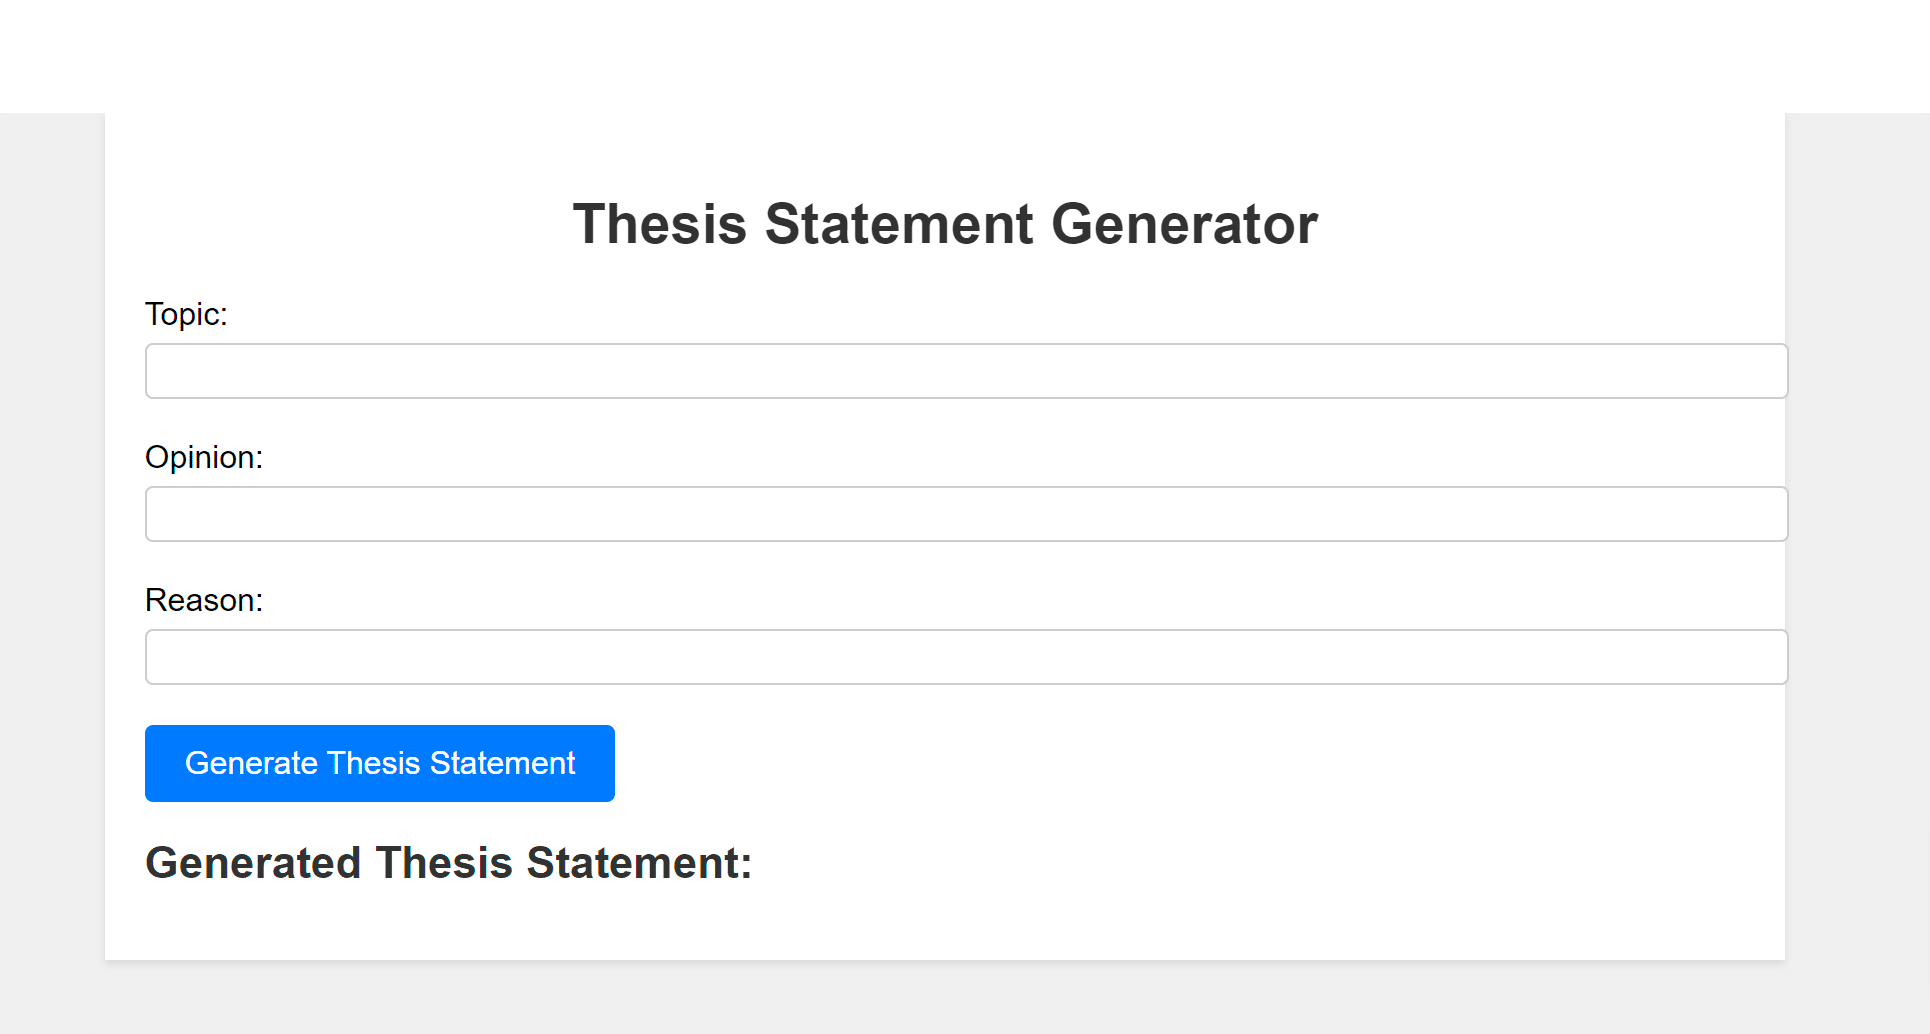 reword my thesis statement generator